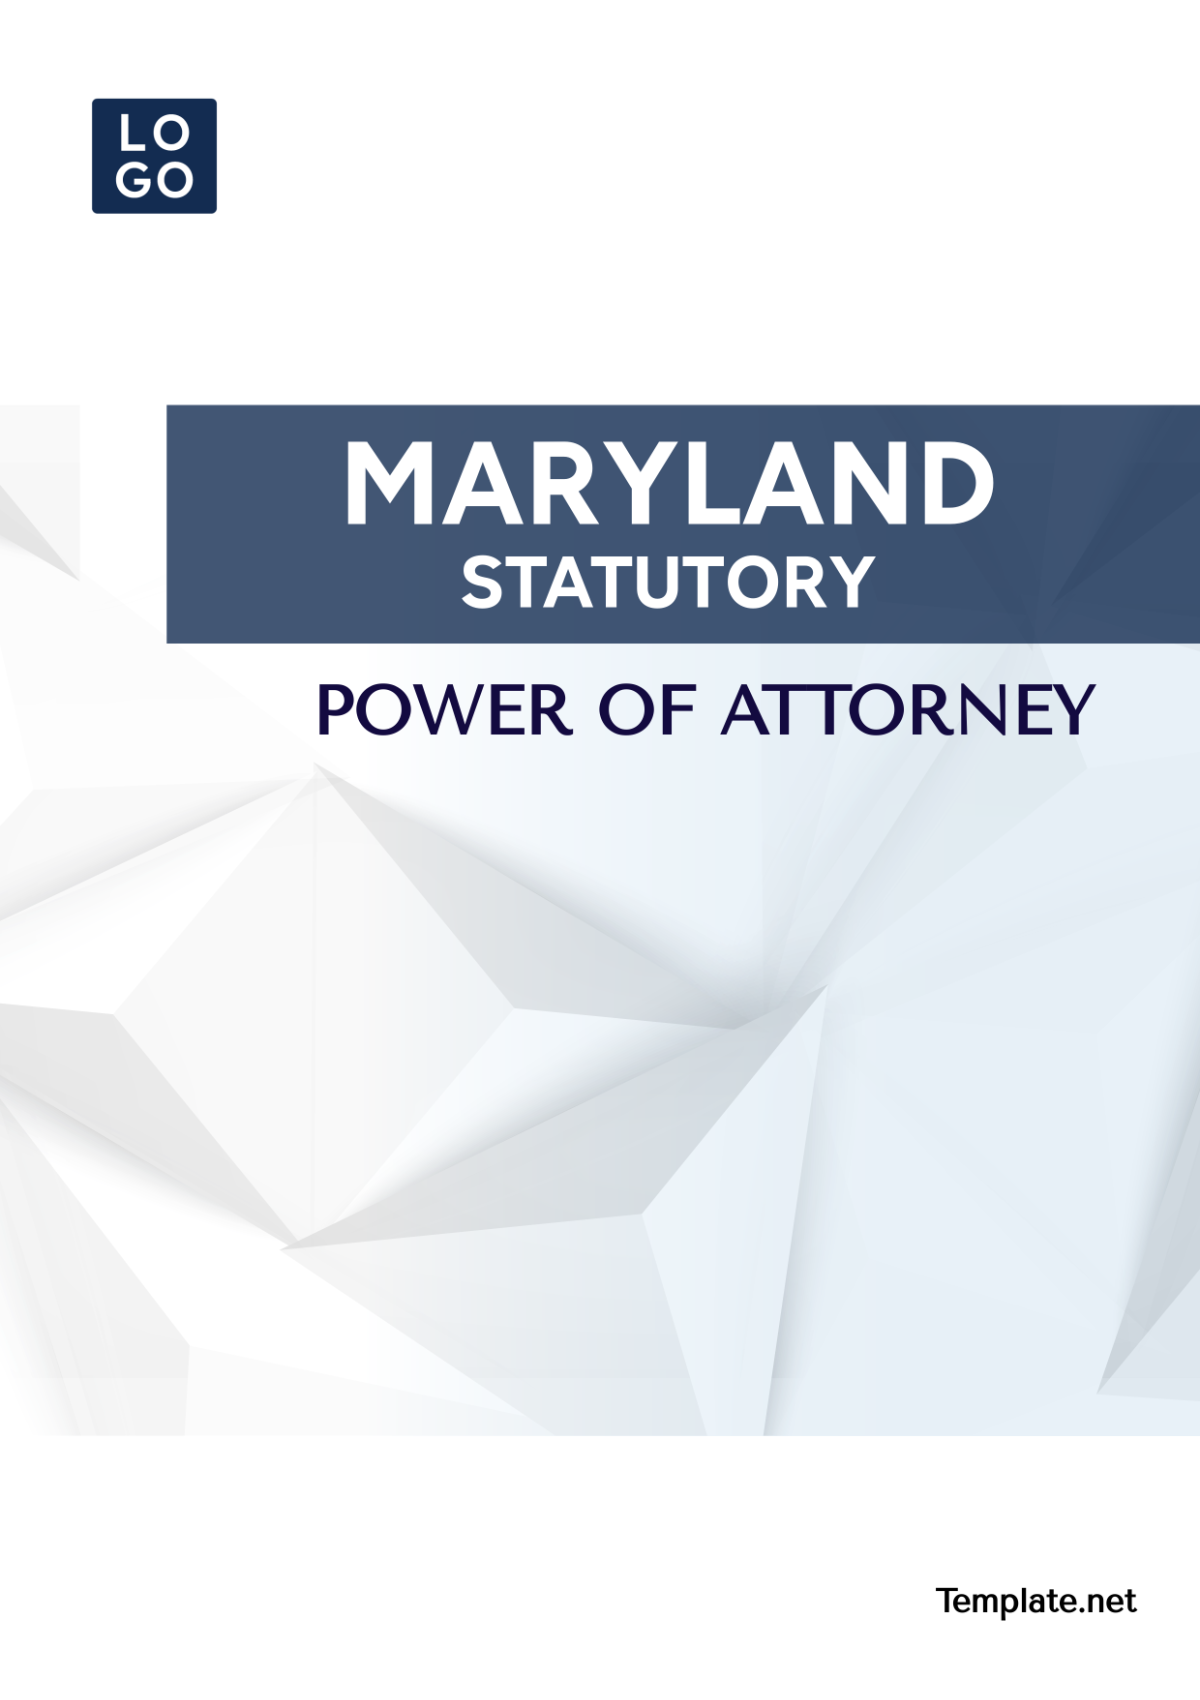 Maryland Statutory Power of Attorney Template